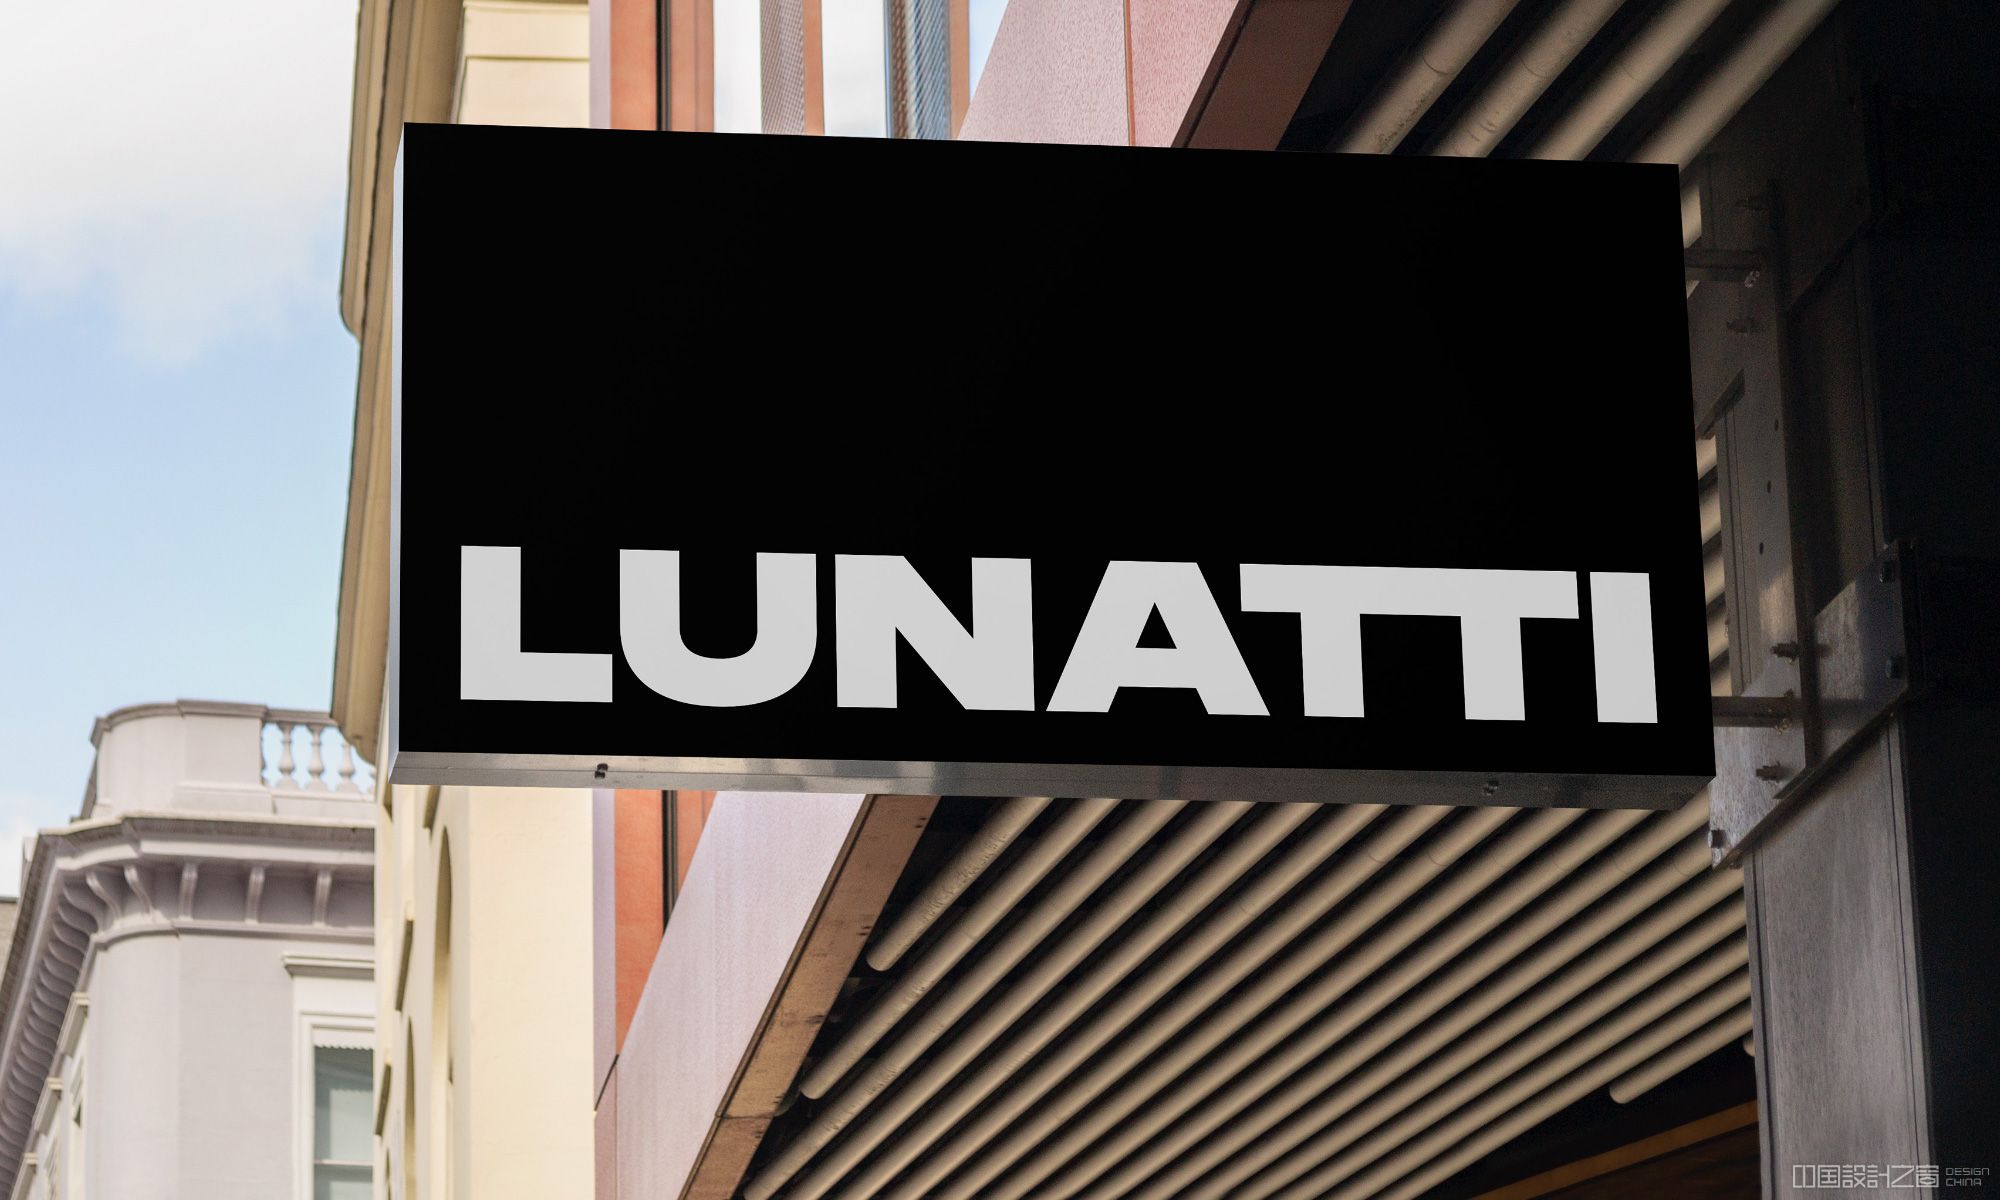 Lunatti logo signage